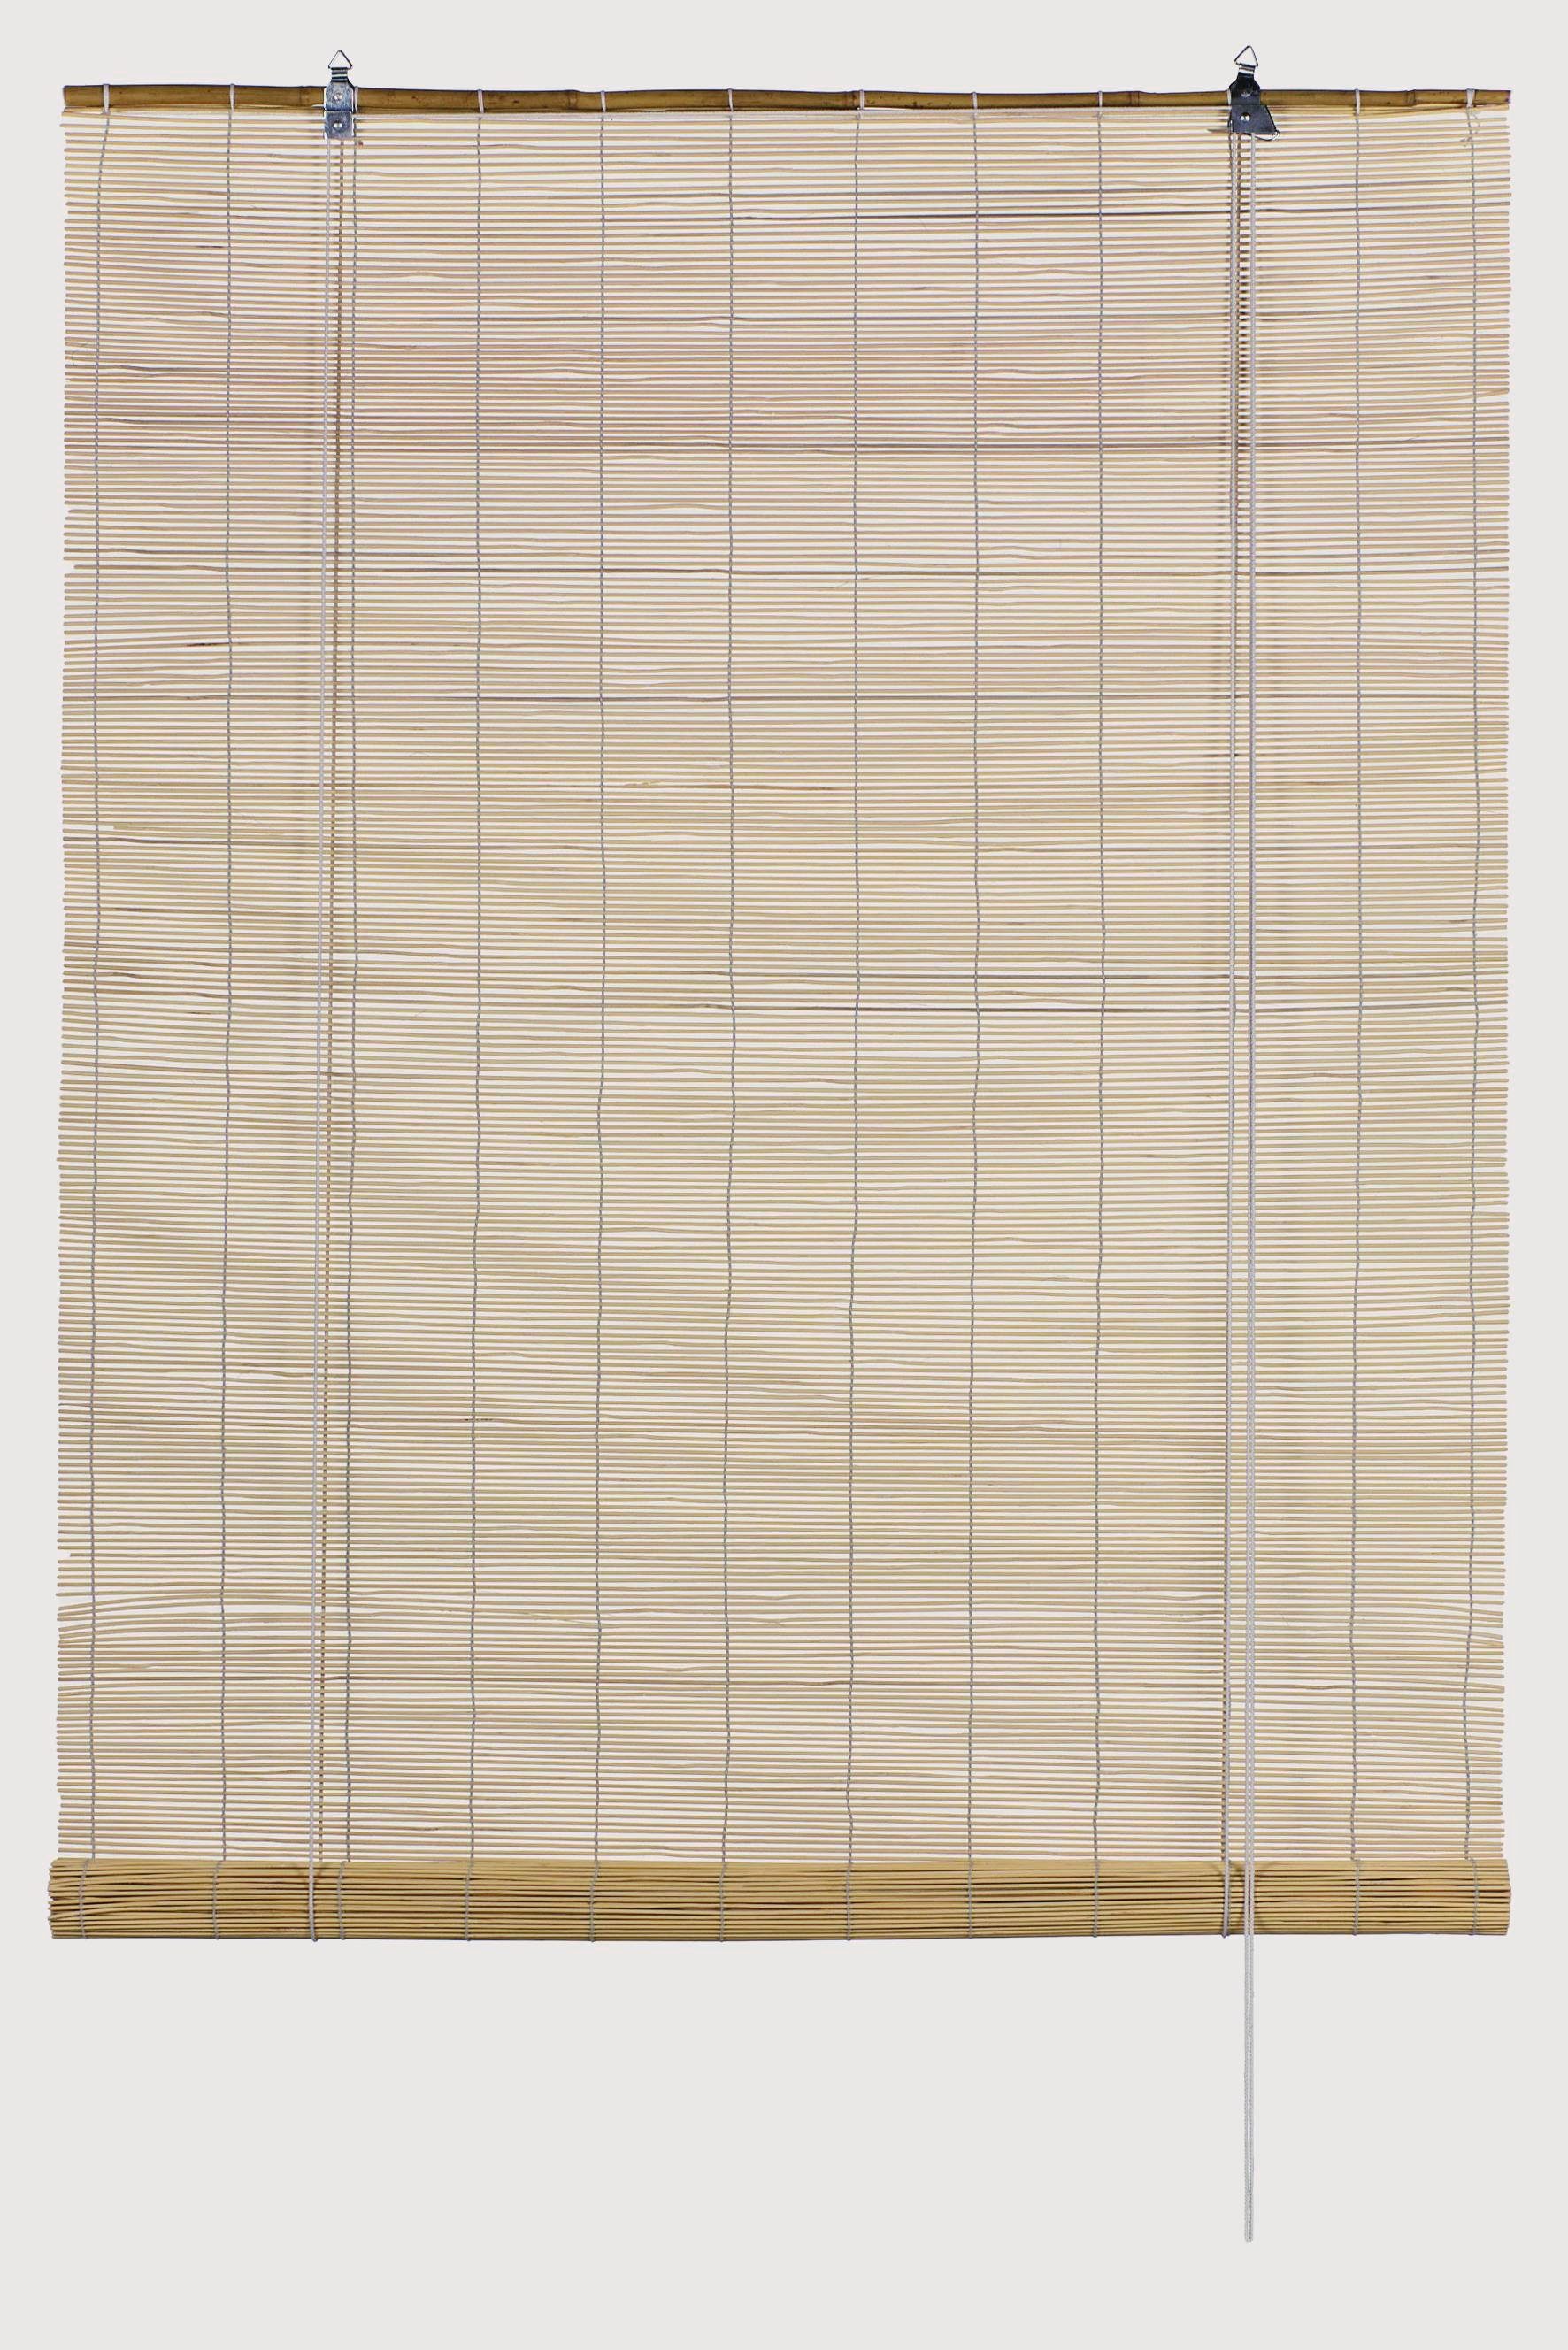 Rollo Gardinia Bambus-Rollo natur 120 x 160 cm, GARDINIA, Lichtschutz, standard